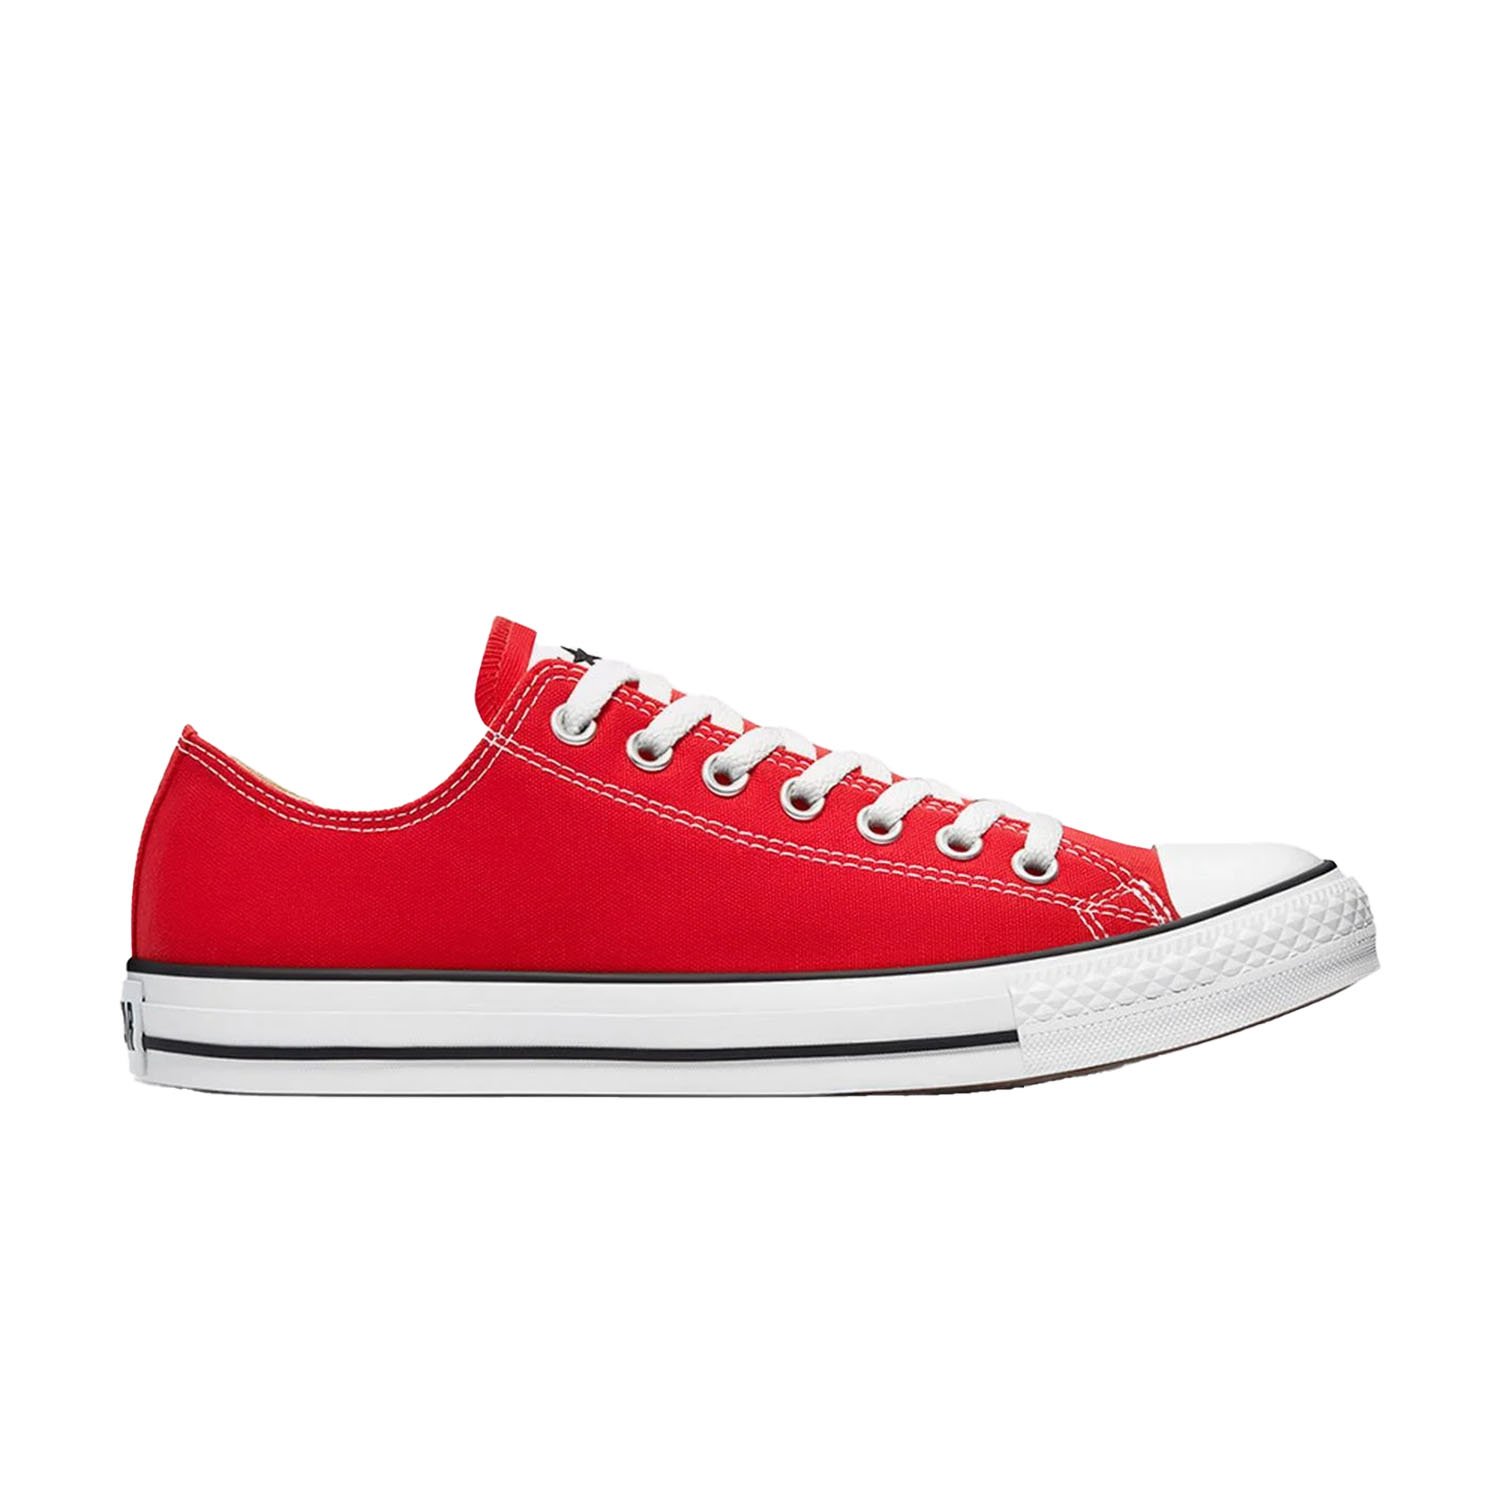 Converse Chuck Taylor All Star Classic Kadın Ayakkabı - Kırmızı - 1